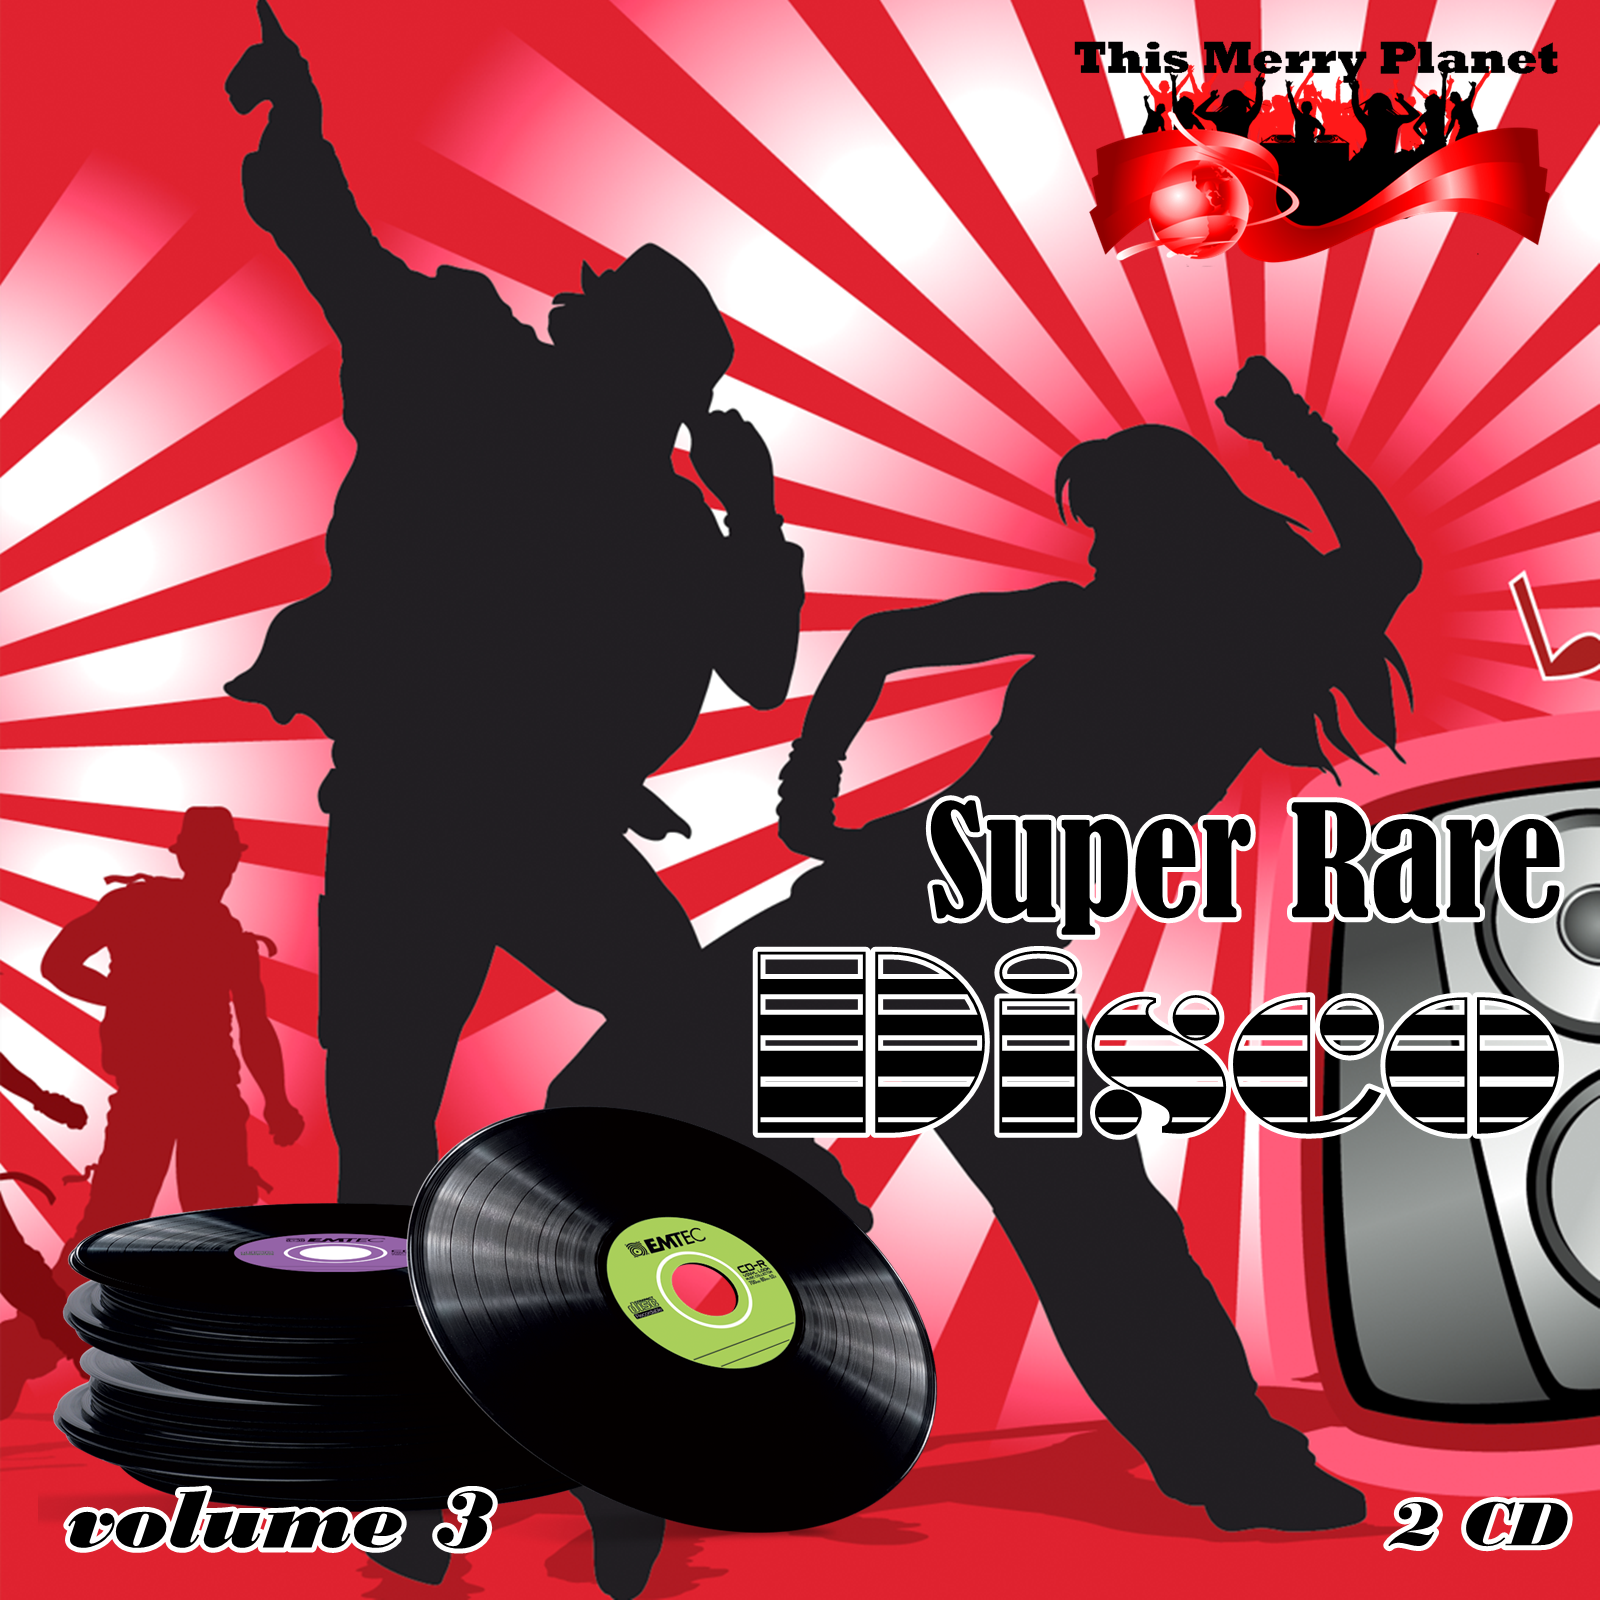 Супер песни mp3. Disco Planet mp3. Super rare Mixtape Vol 1. Disco rare Raisins Vol. 11. Super rare музыка.